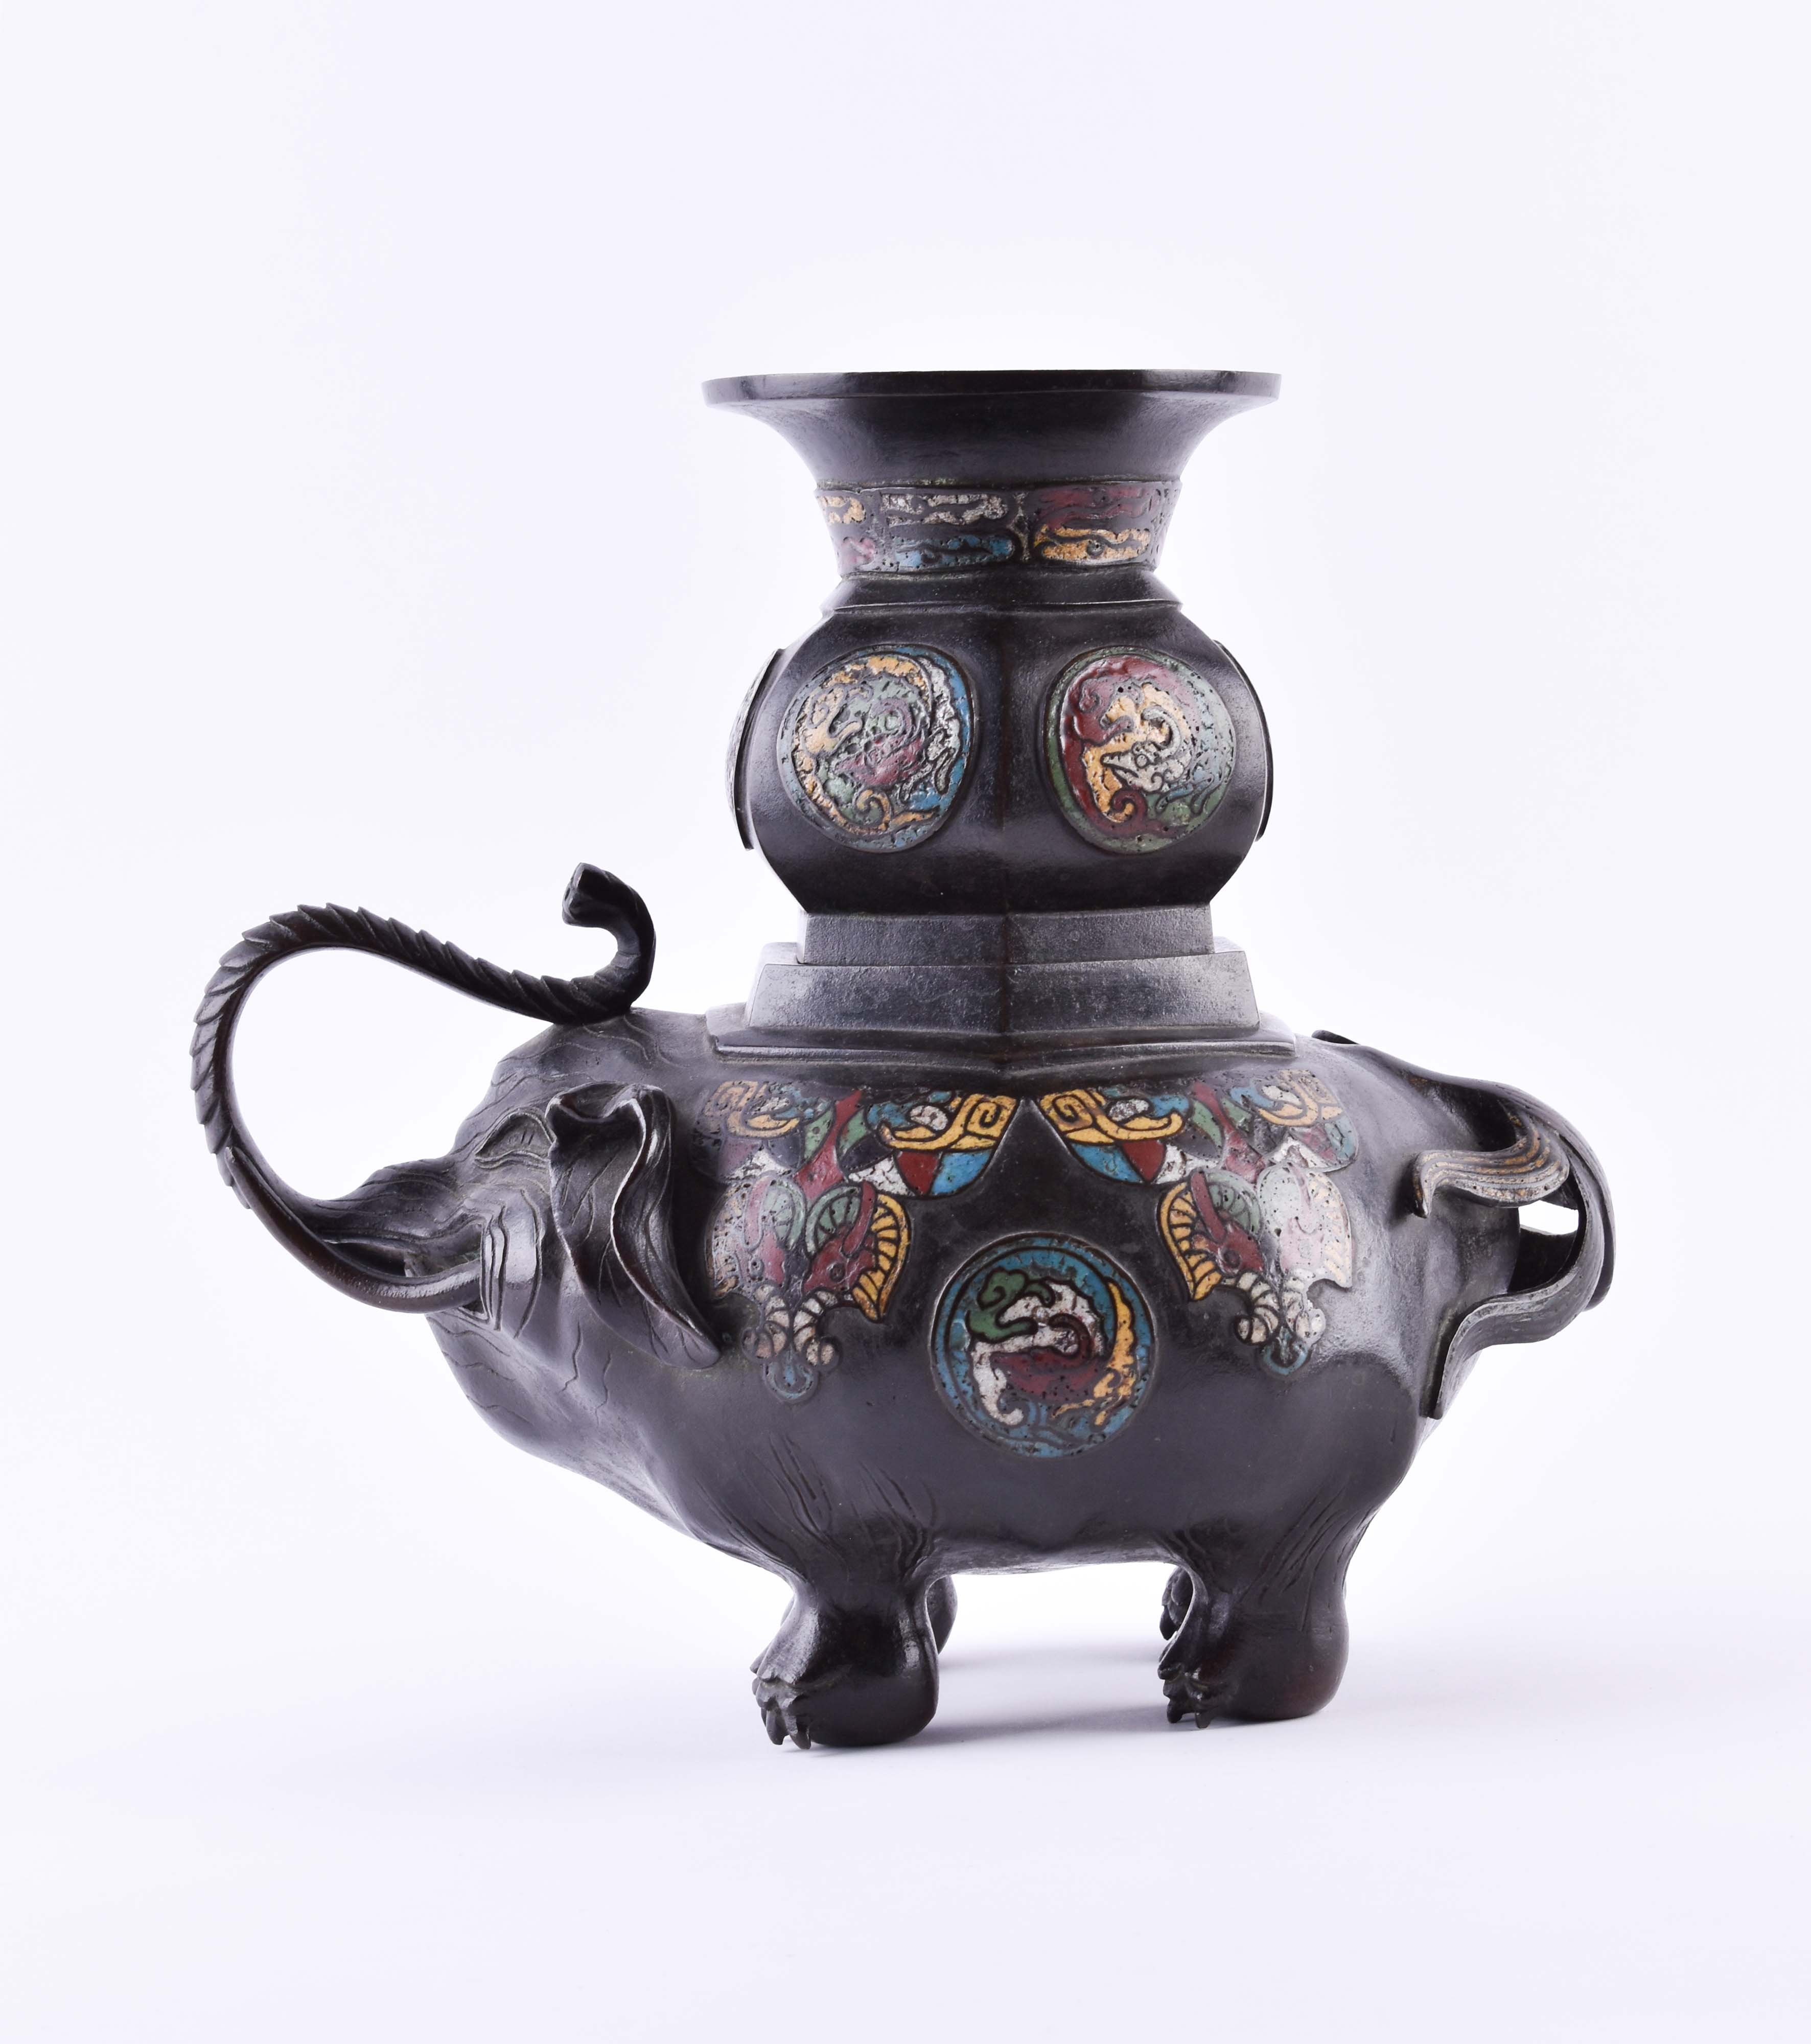  Figurative cloisonne Koro China Qing dynasty - Image 3 of 10